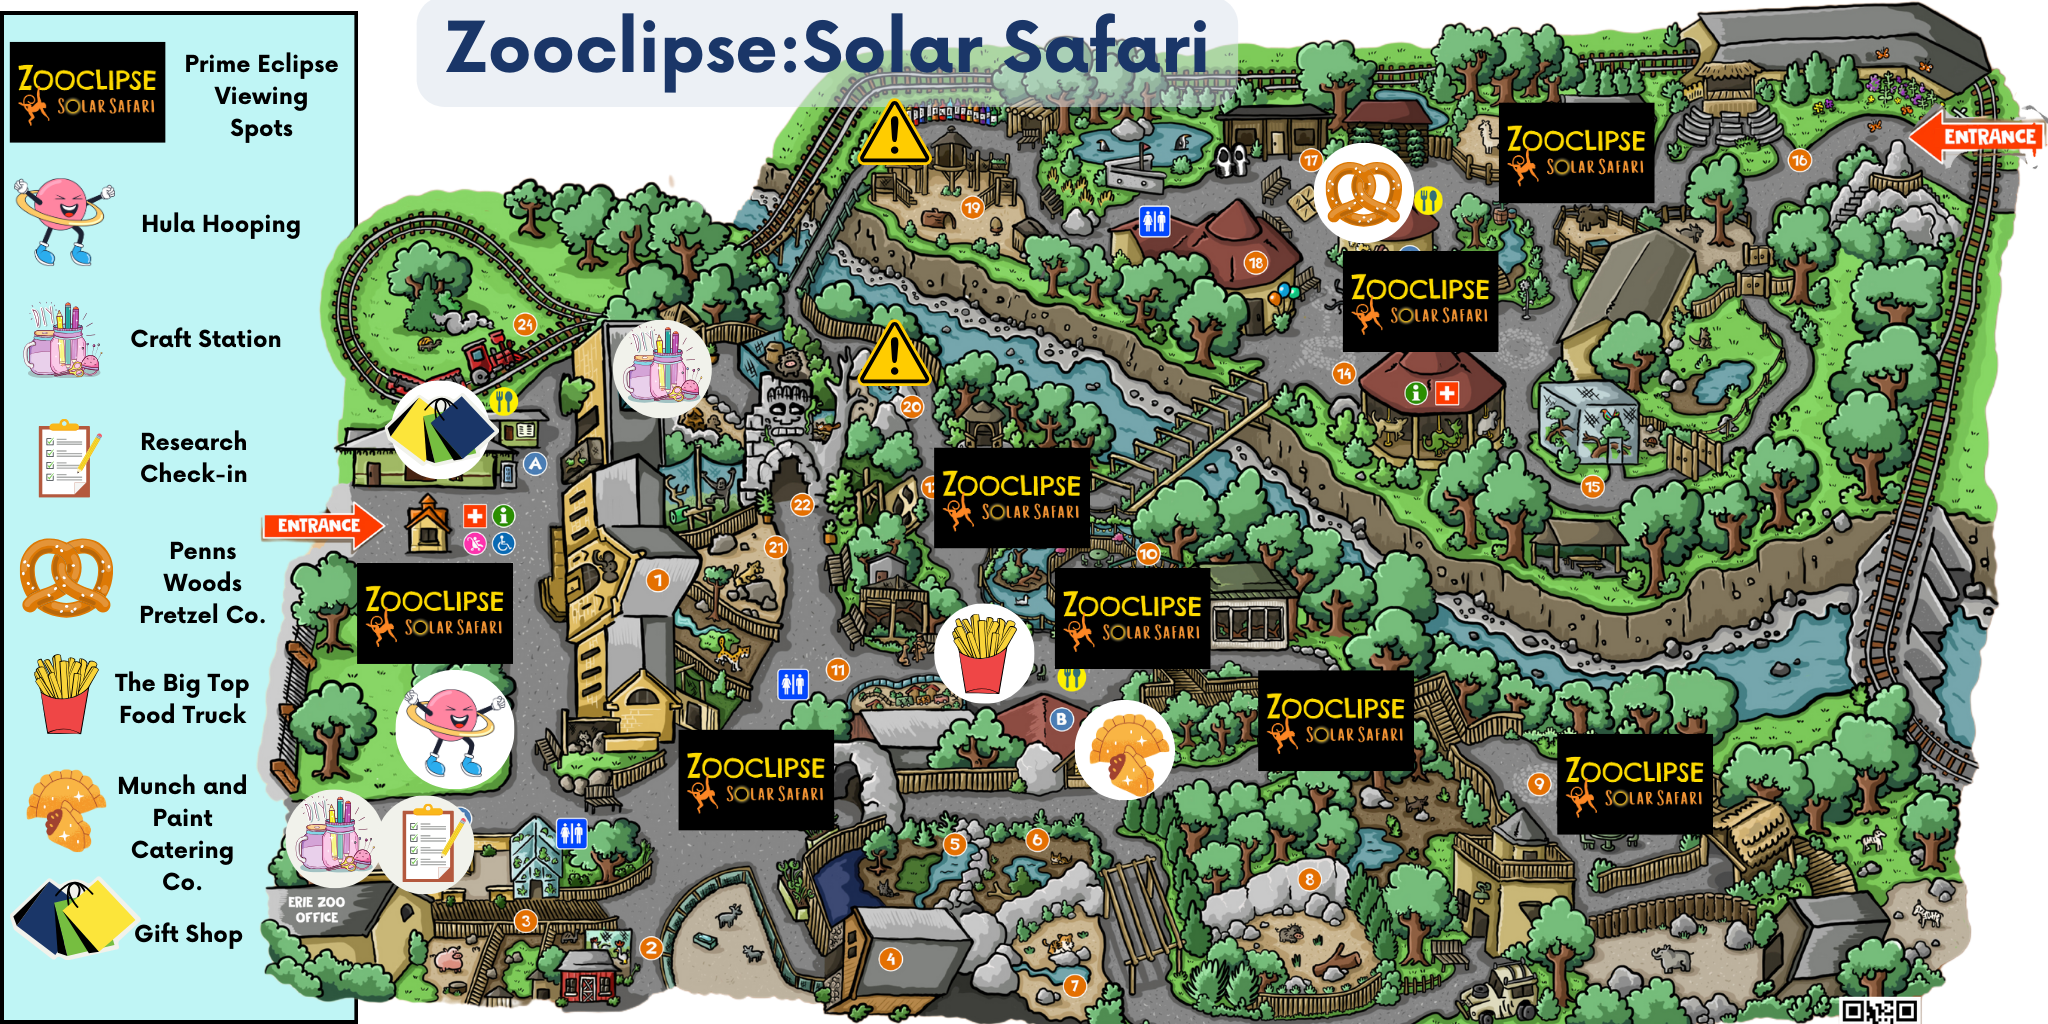 zooclipse-solar-safari.png